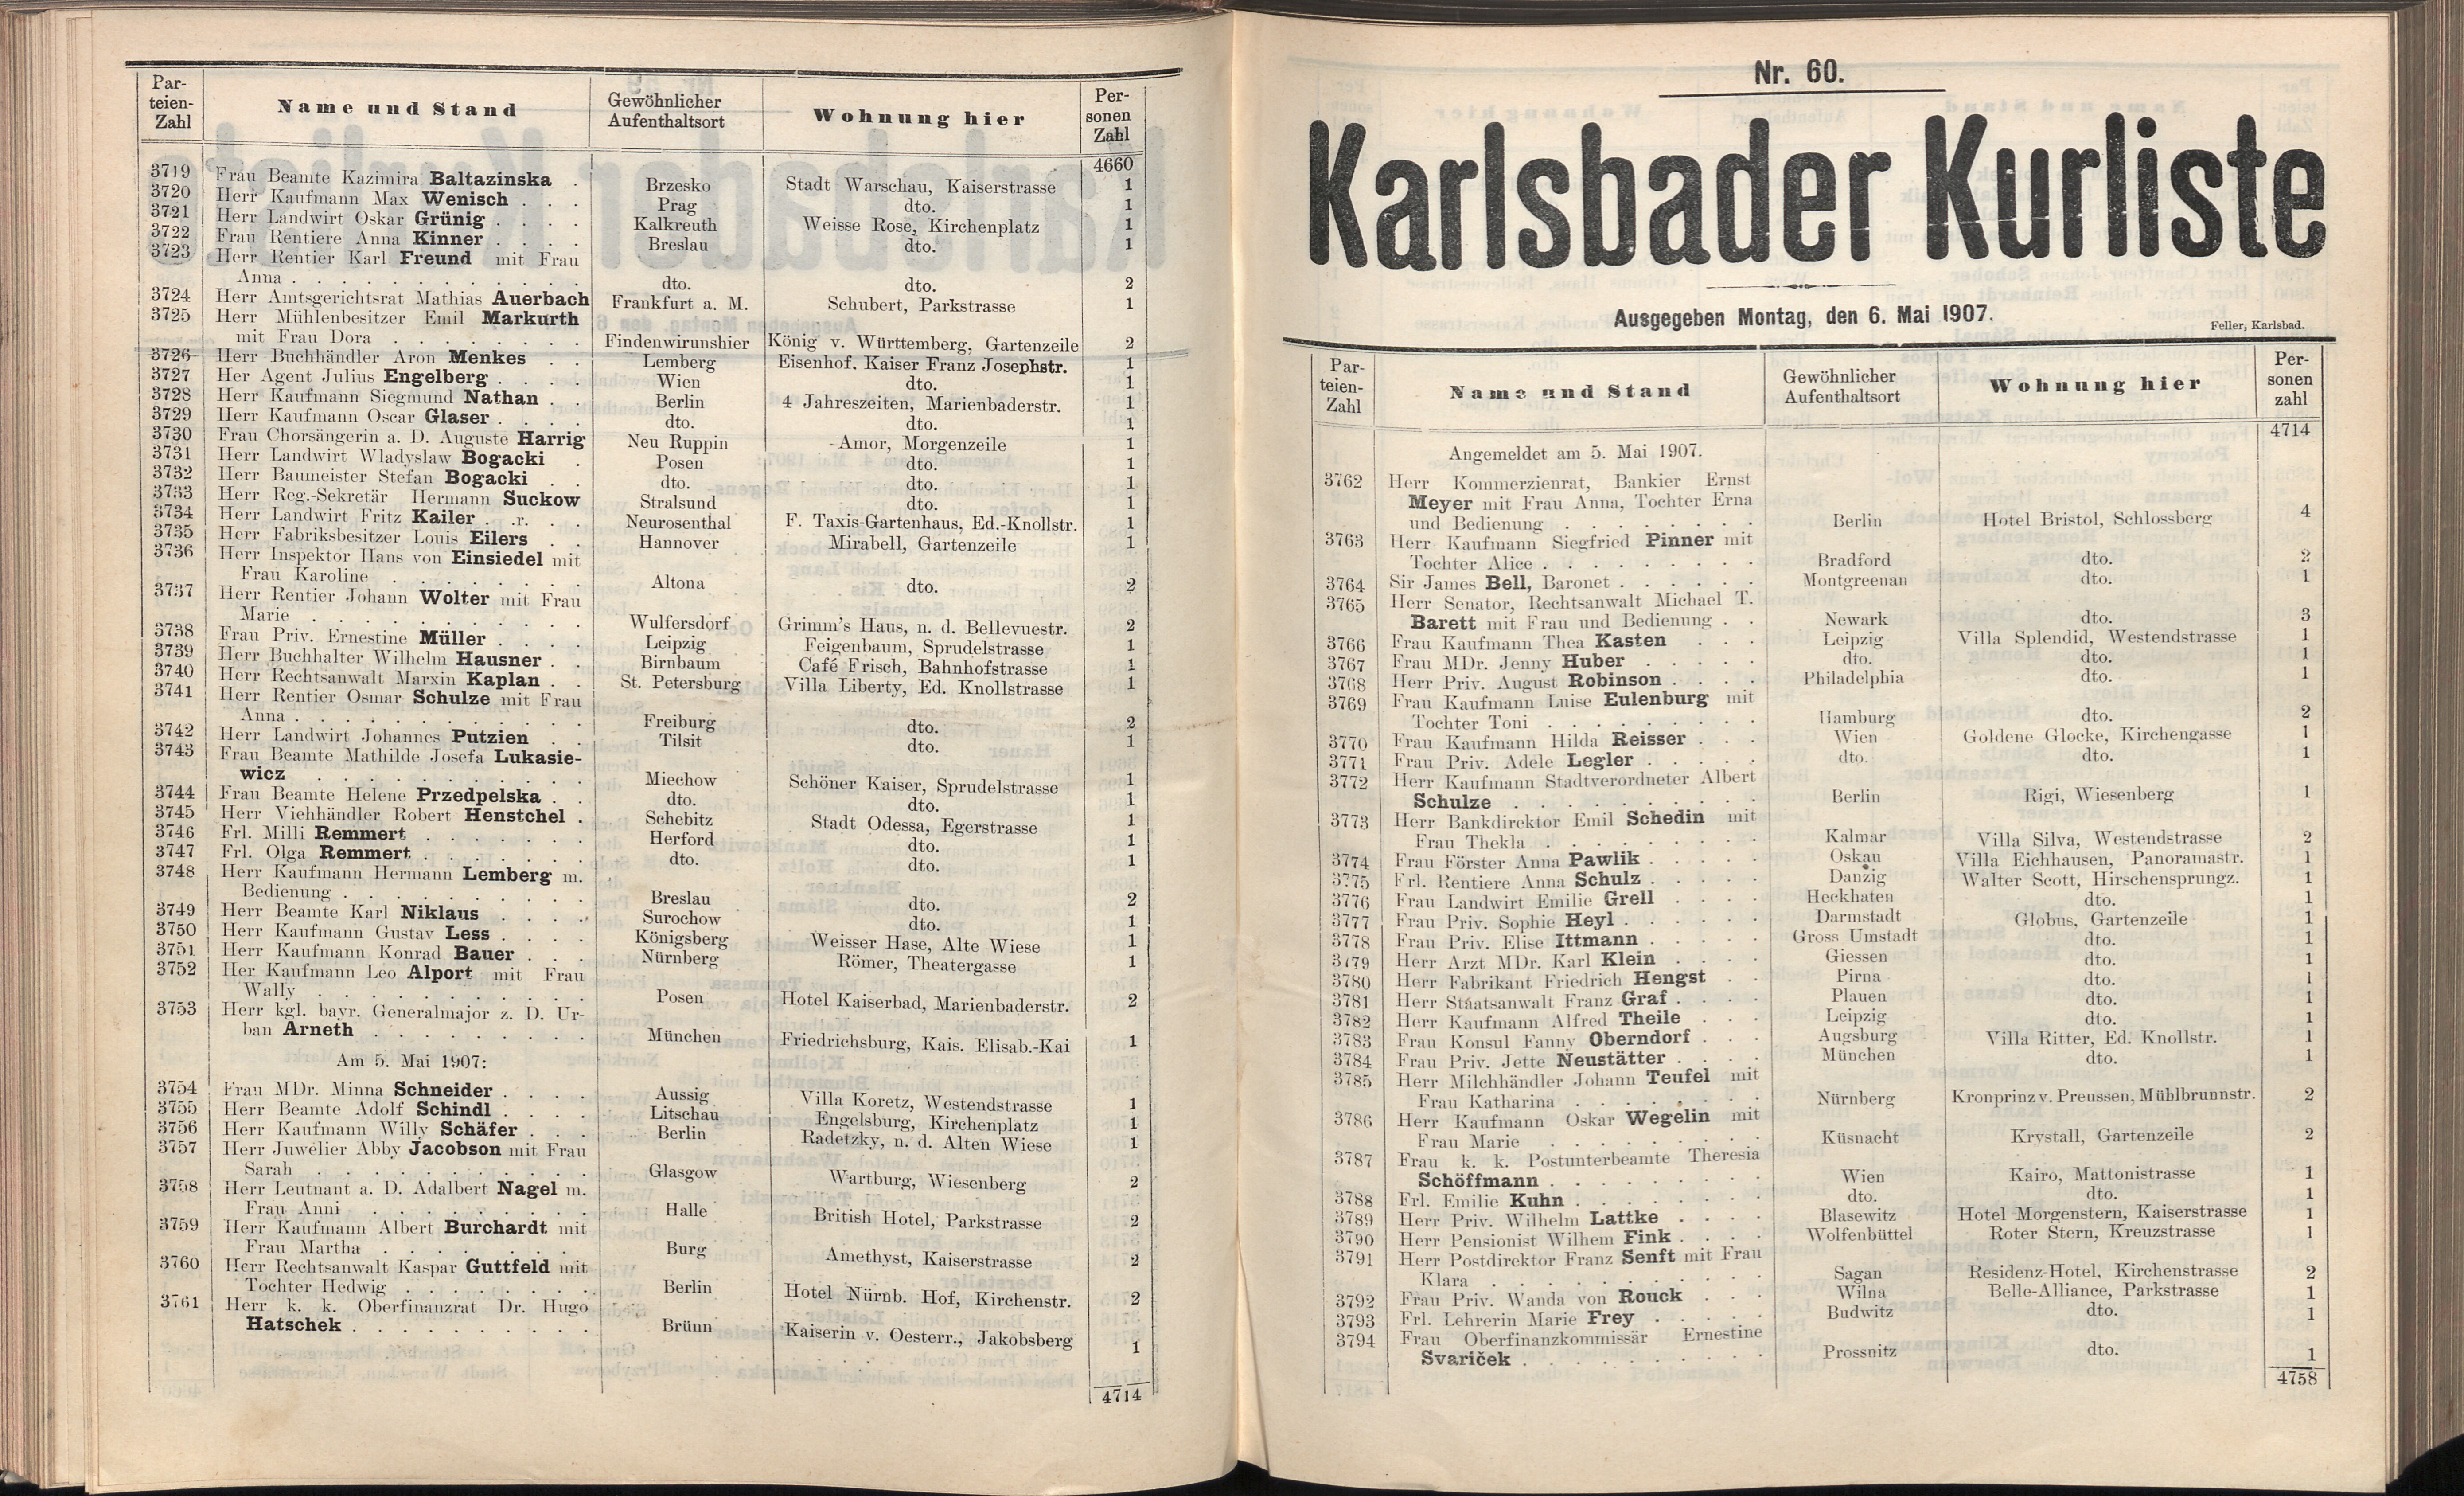 173. soap-kv_knihovna_karlsbader-kurliste-1907_1740